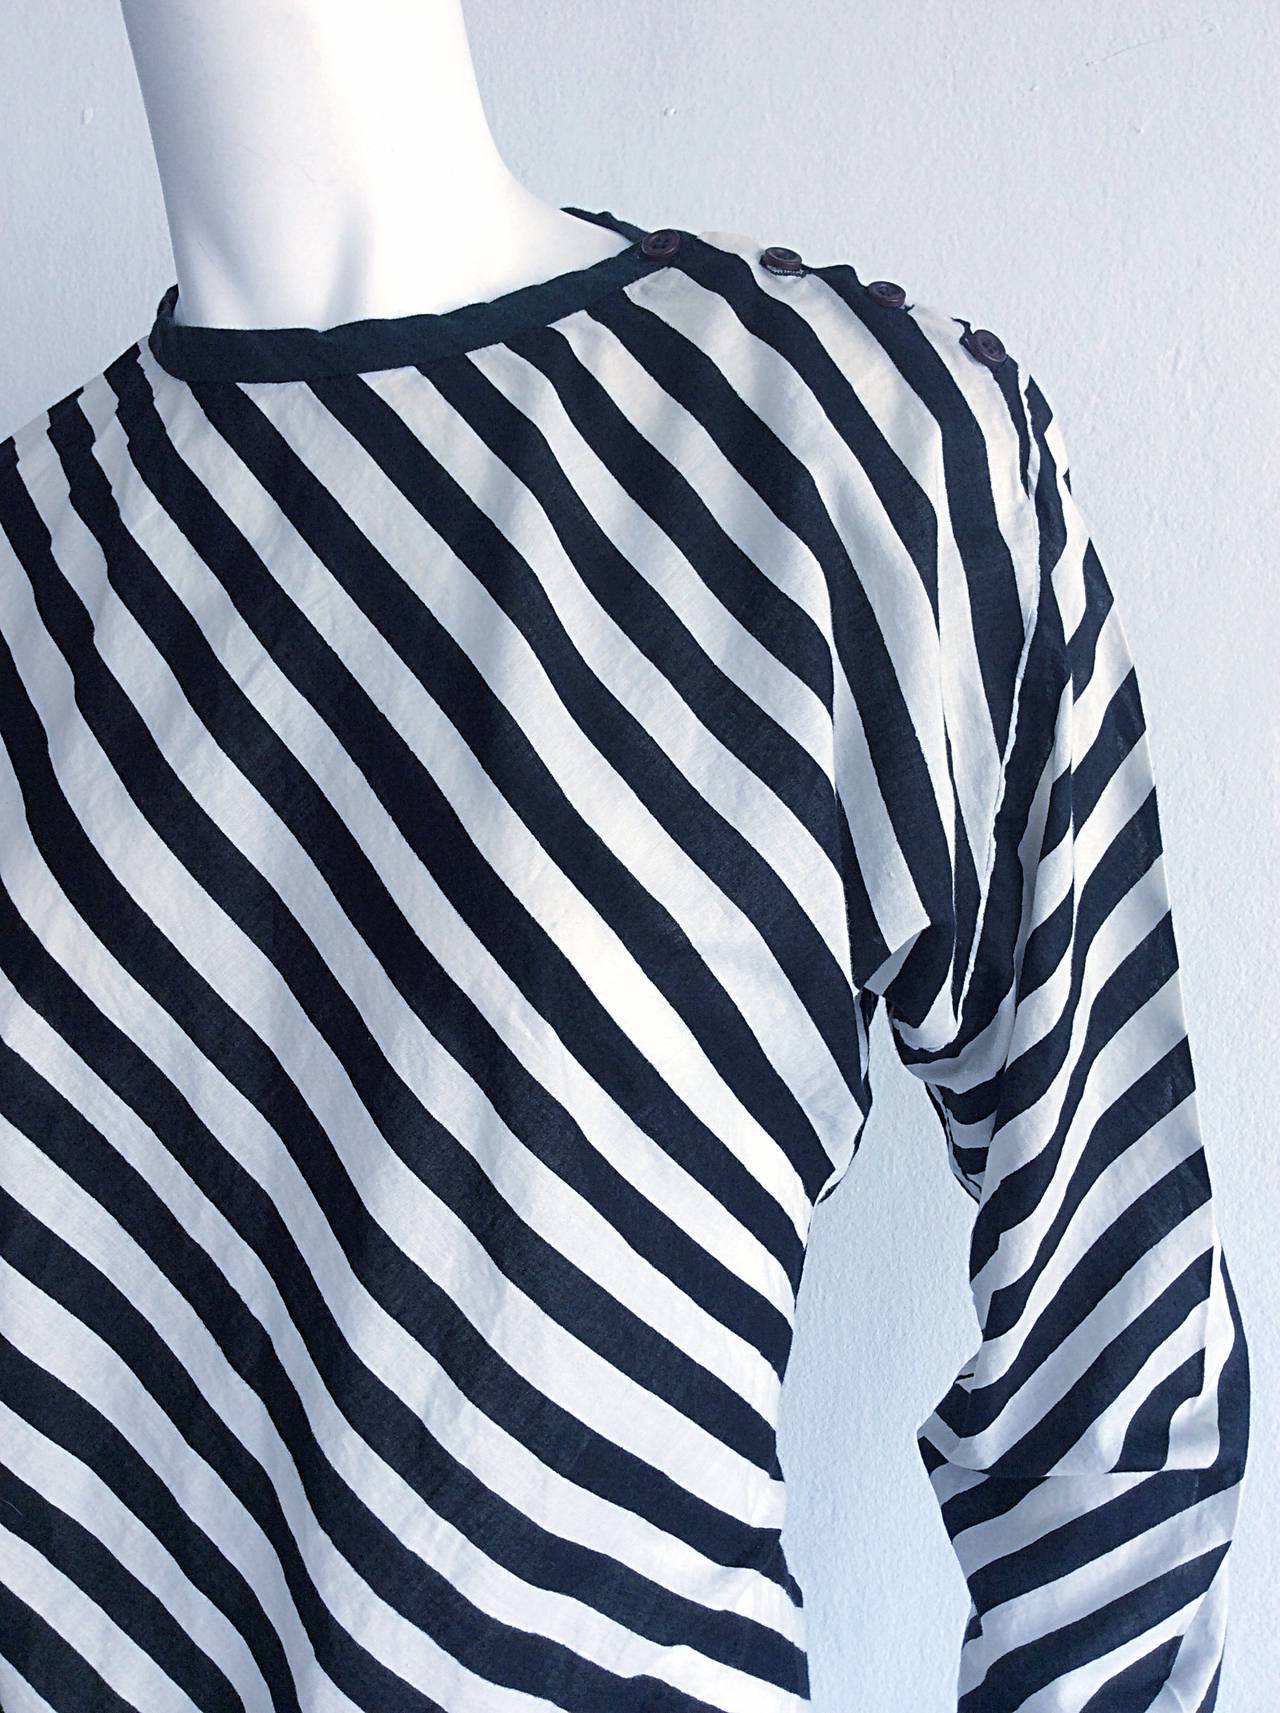 black and white striped jail shirt